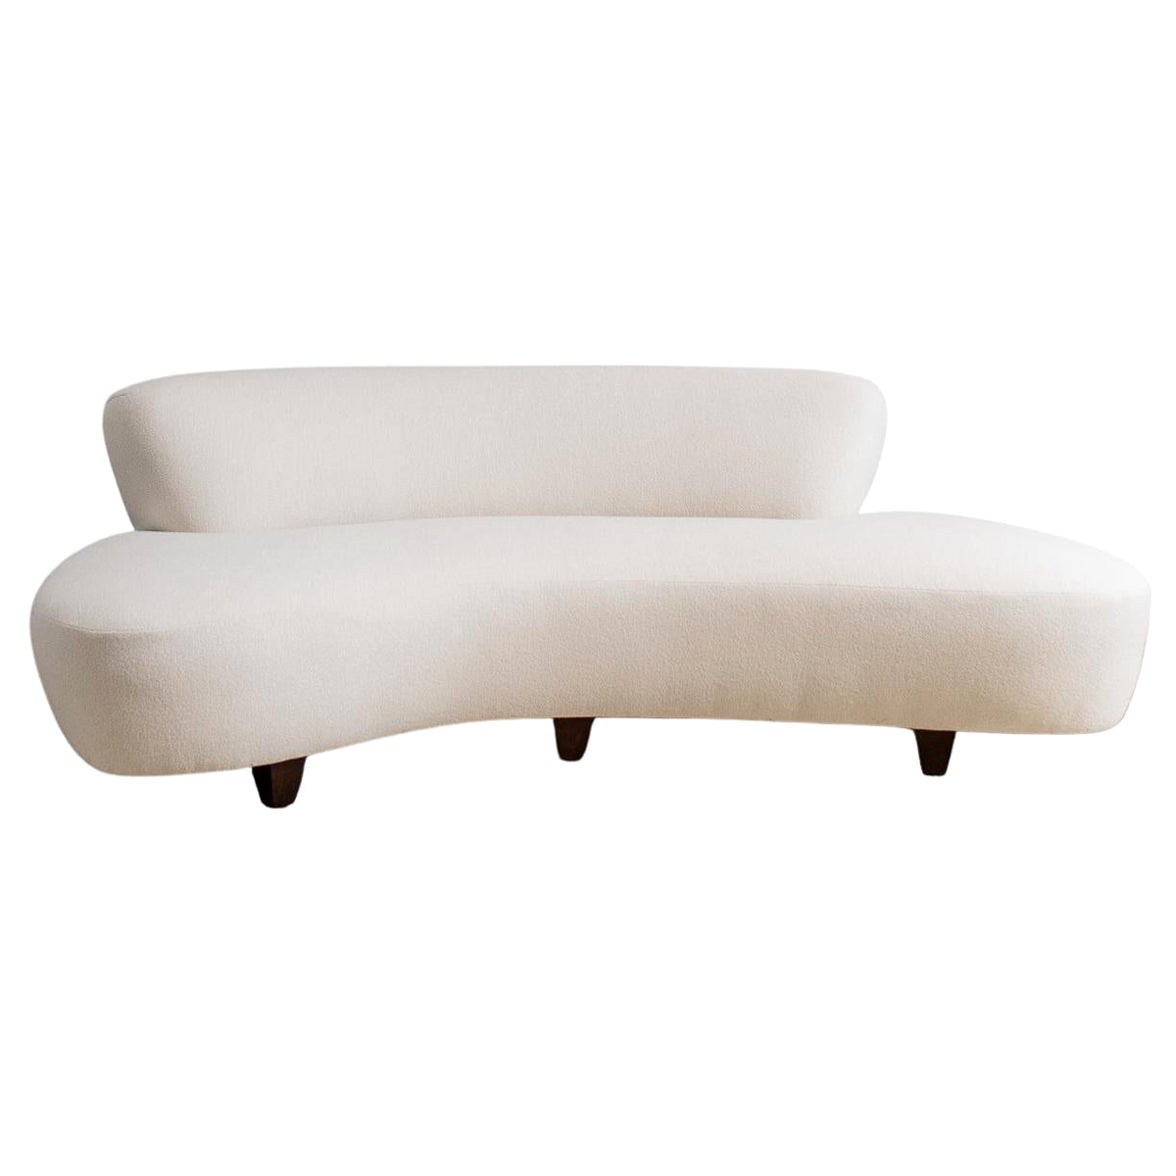 Cloud Sofa for Modernica Inspired by Vladimir Kagan